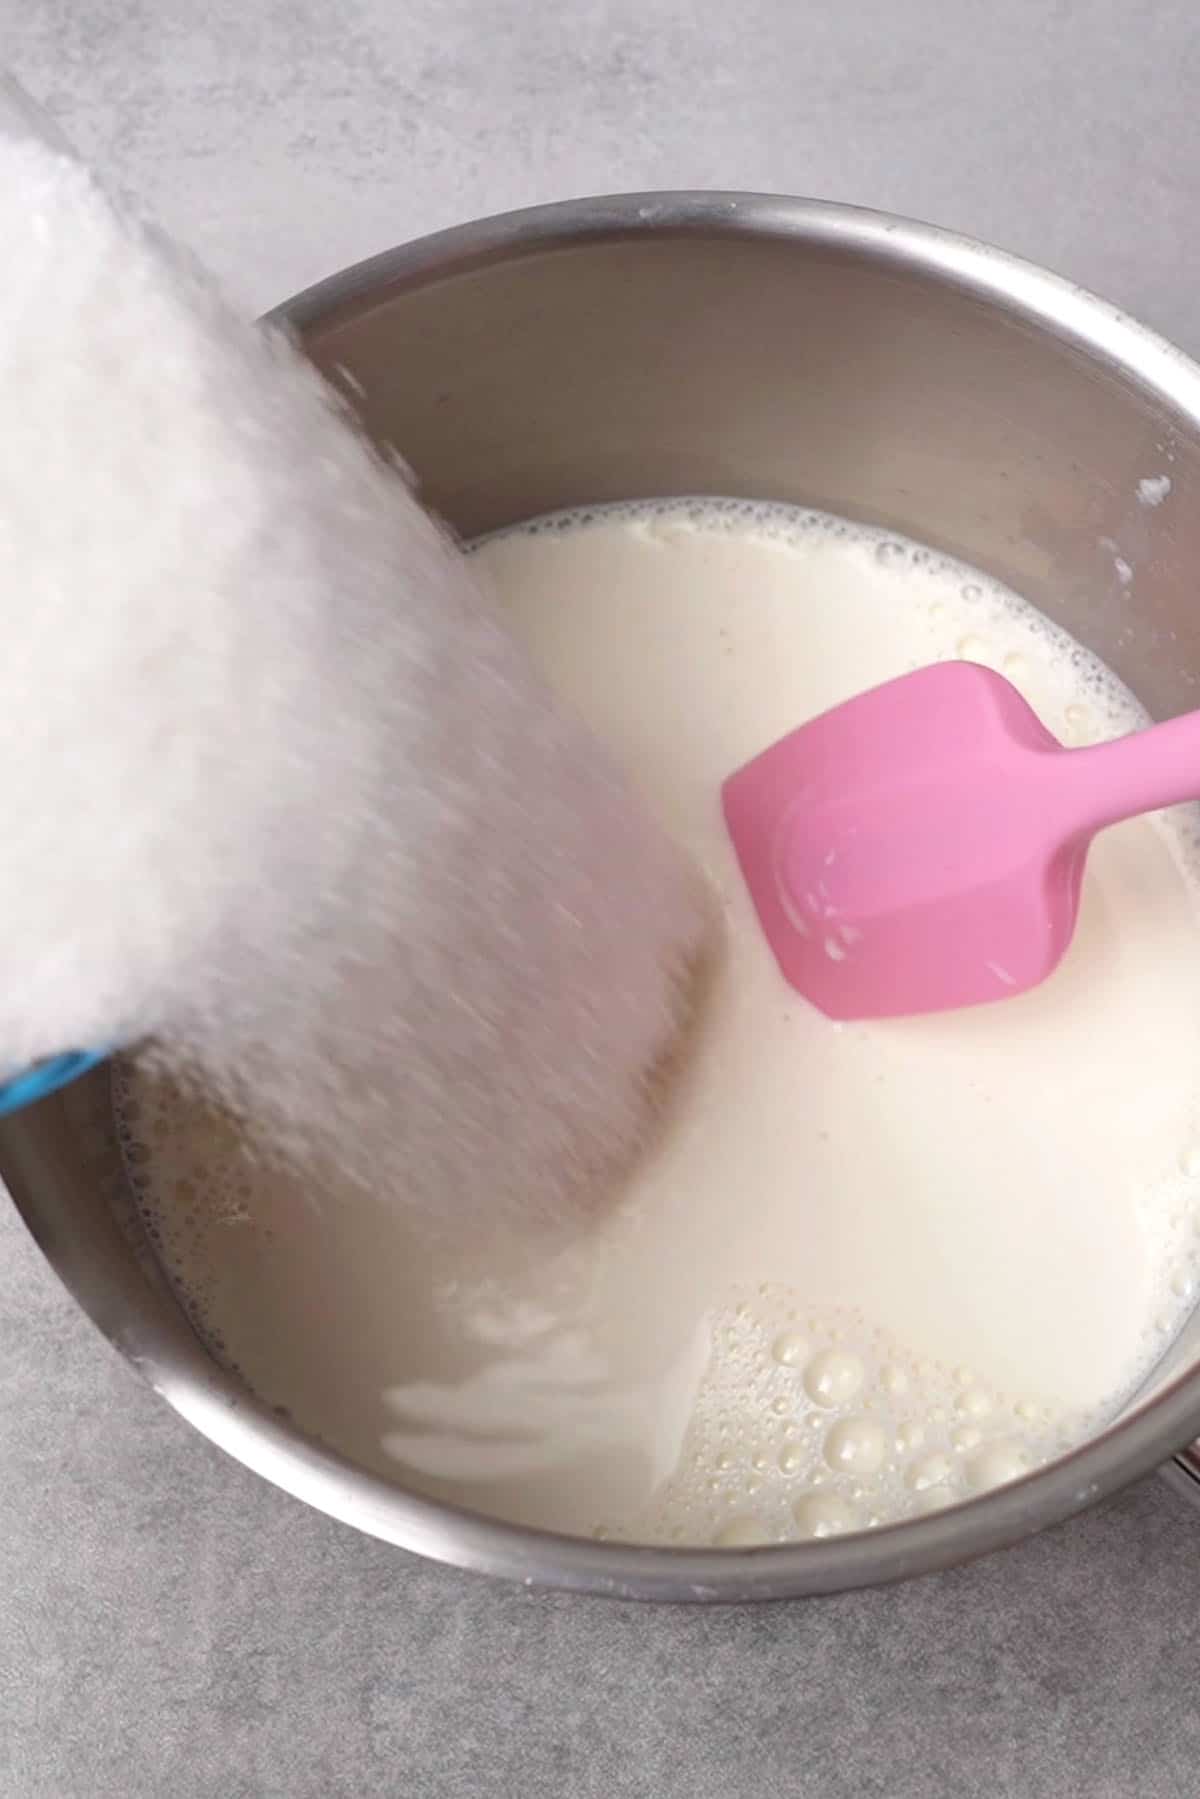 Adding sugar to milk in a put to create condensed milk.